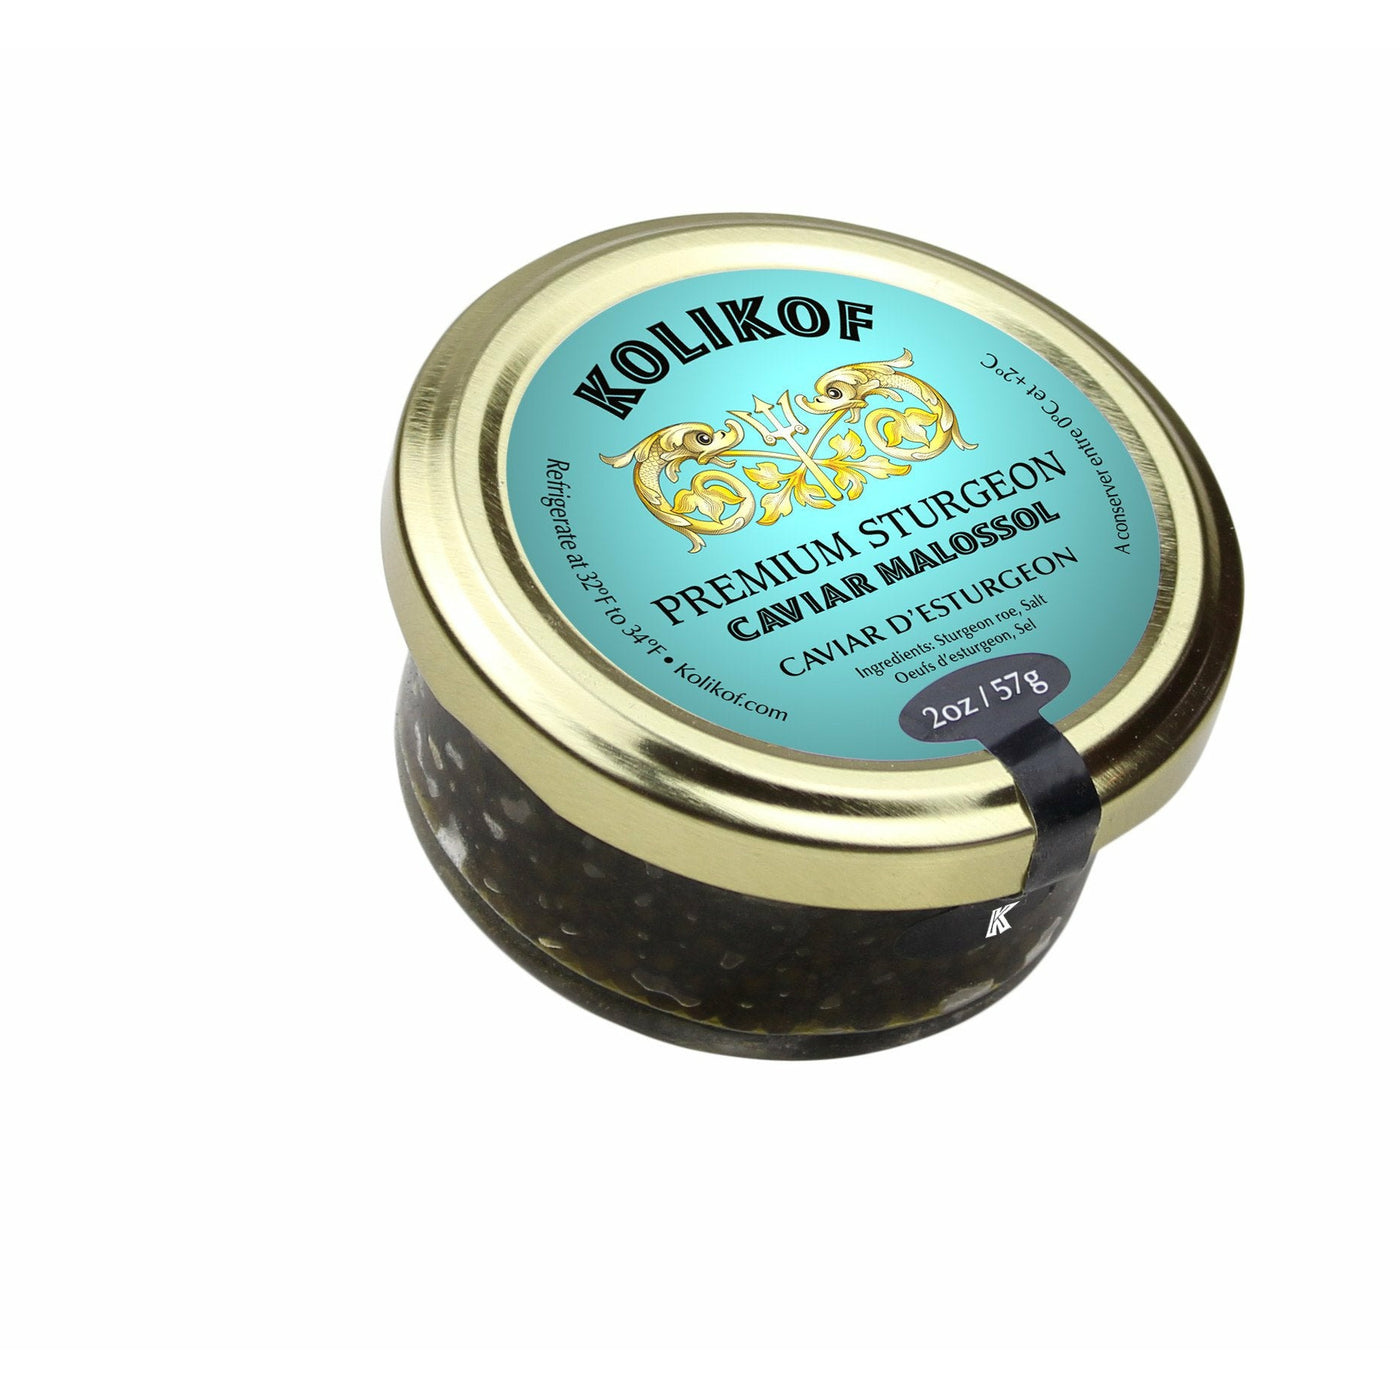 Premium Sturgeon Caviar by Kolikof, 2 oz